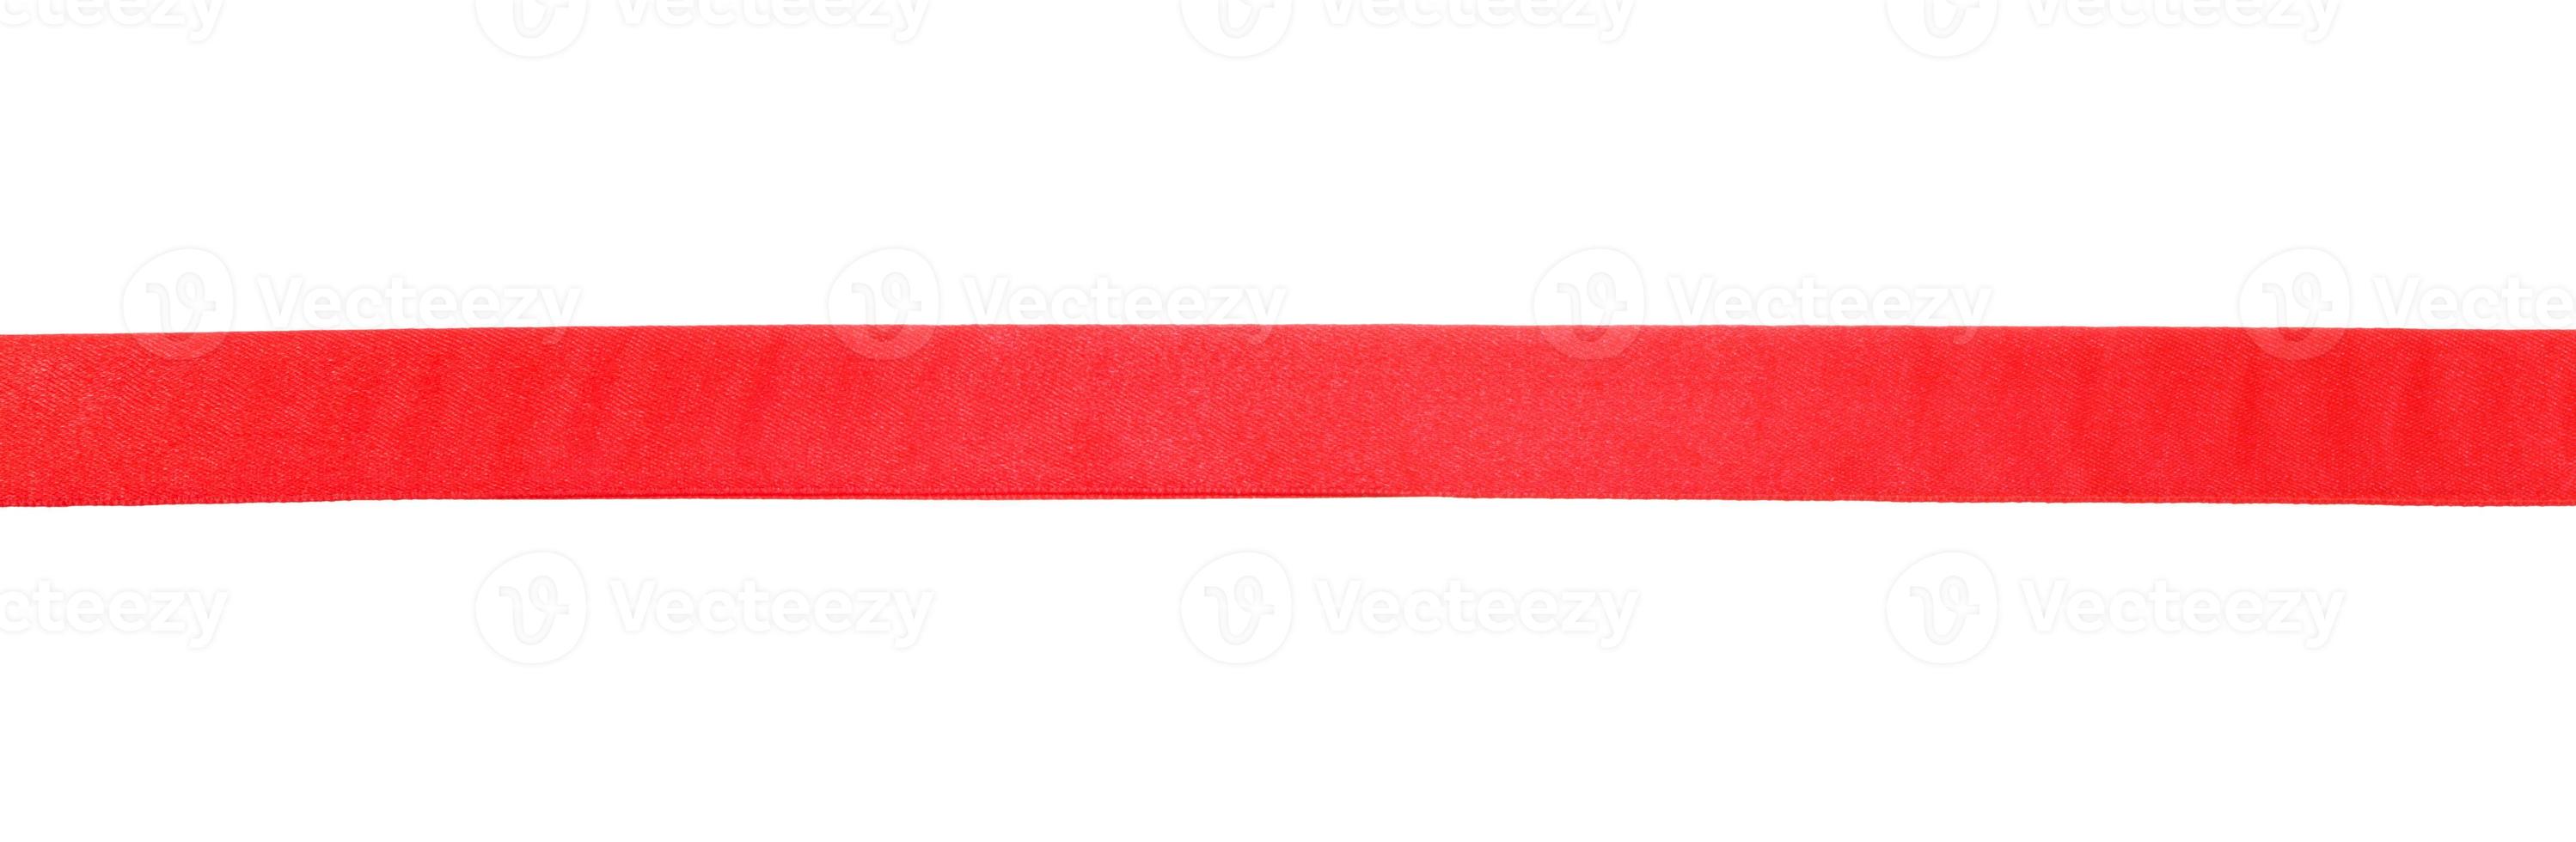 fita de cetim vermelha larga isolada em branco foto